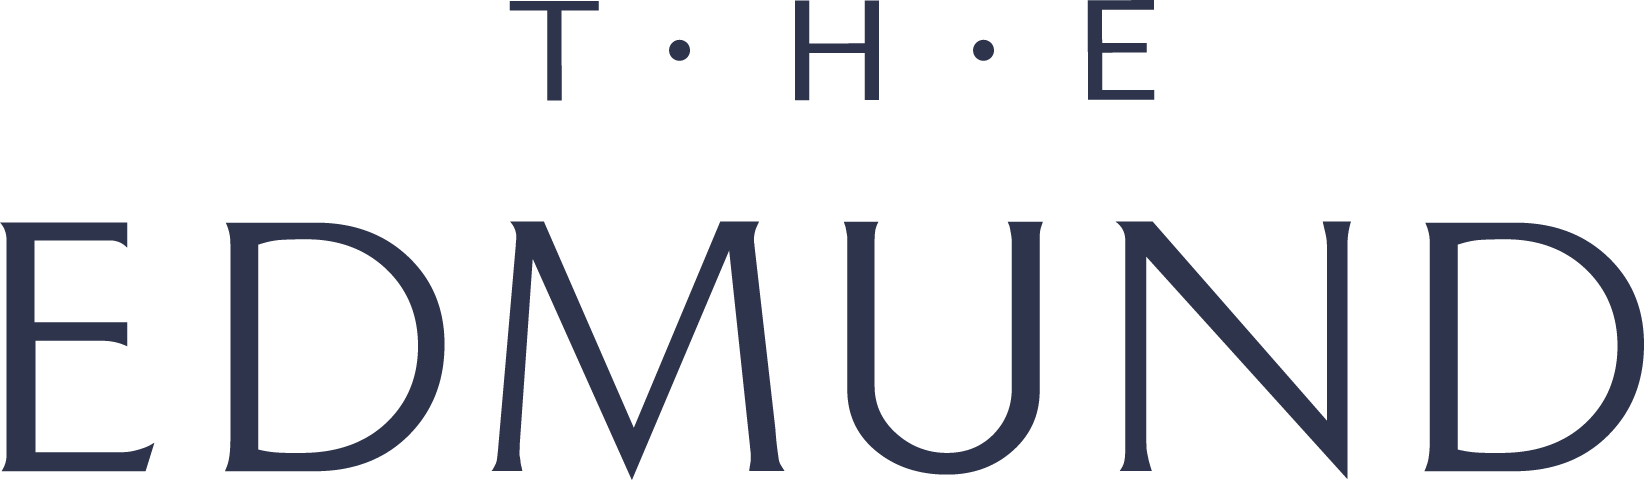 The Edmund logo